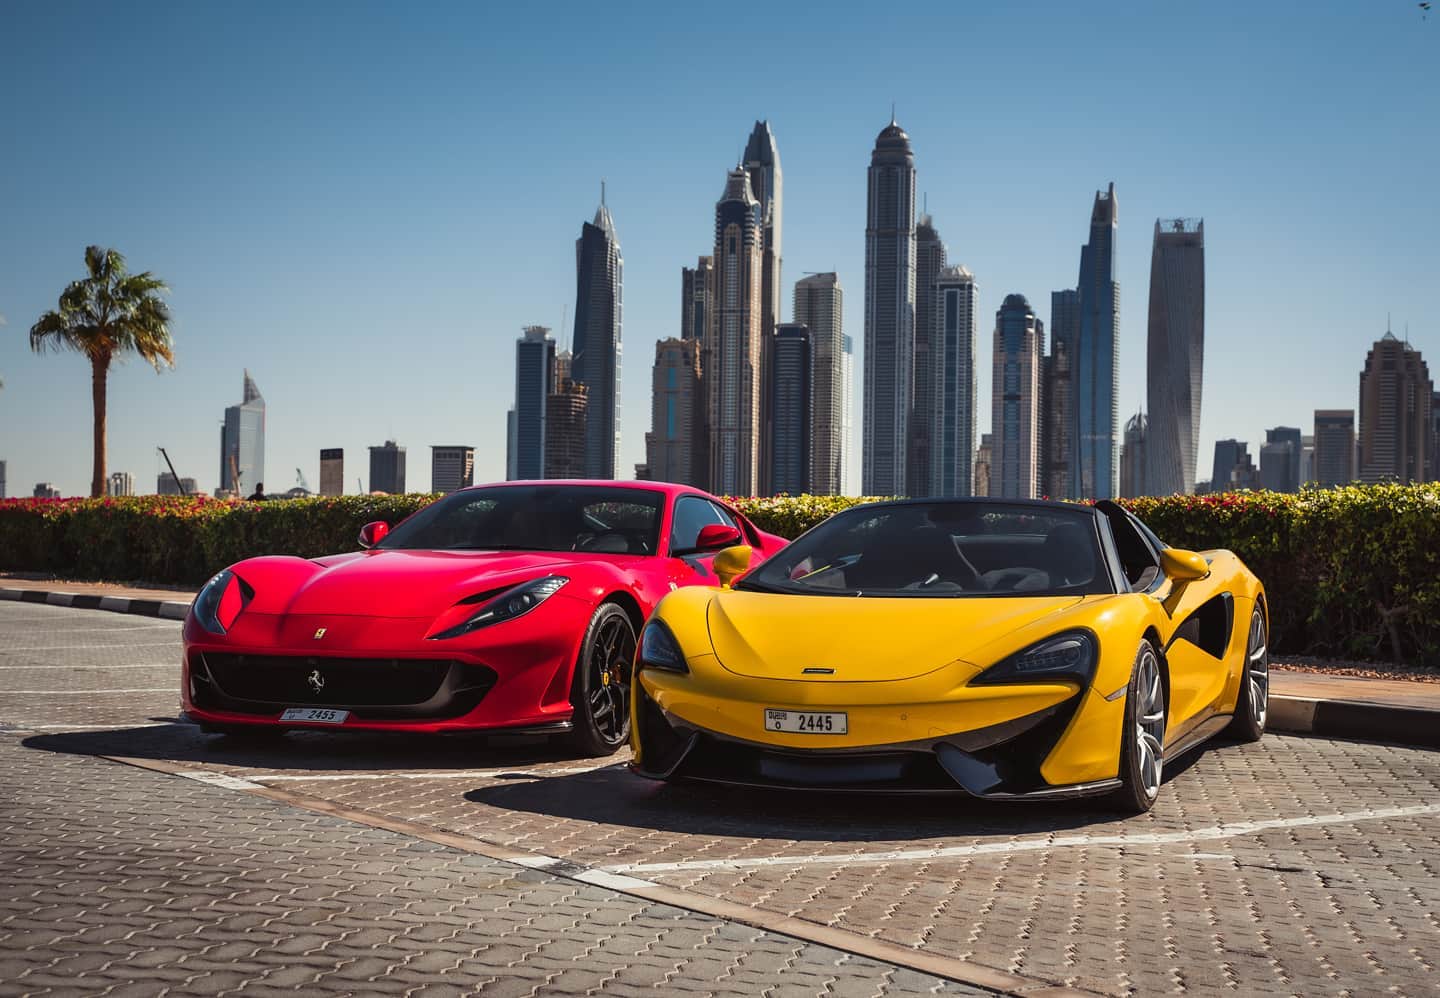 Rent a Luxury Car in Dubai